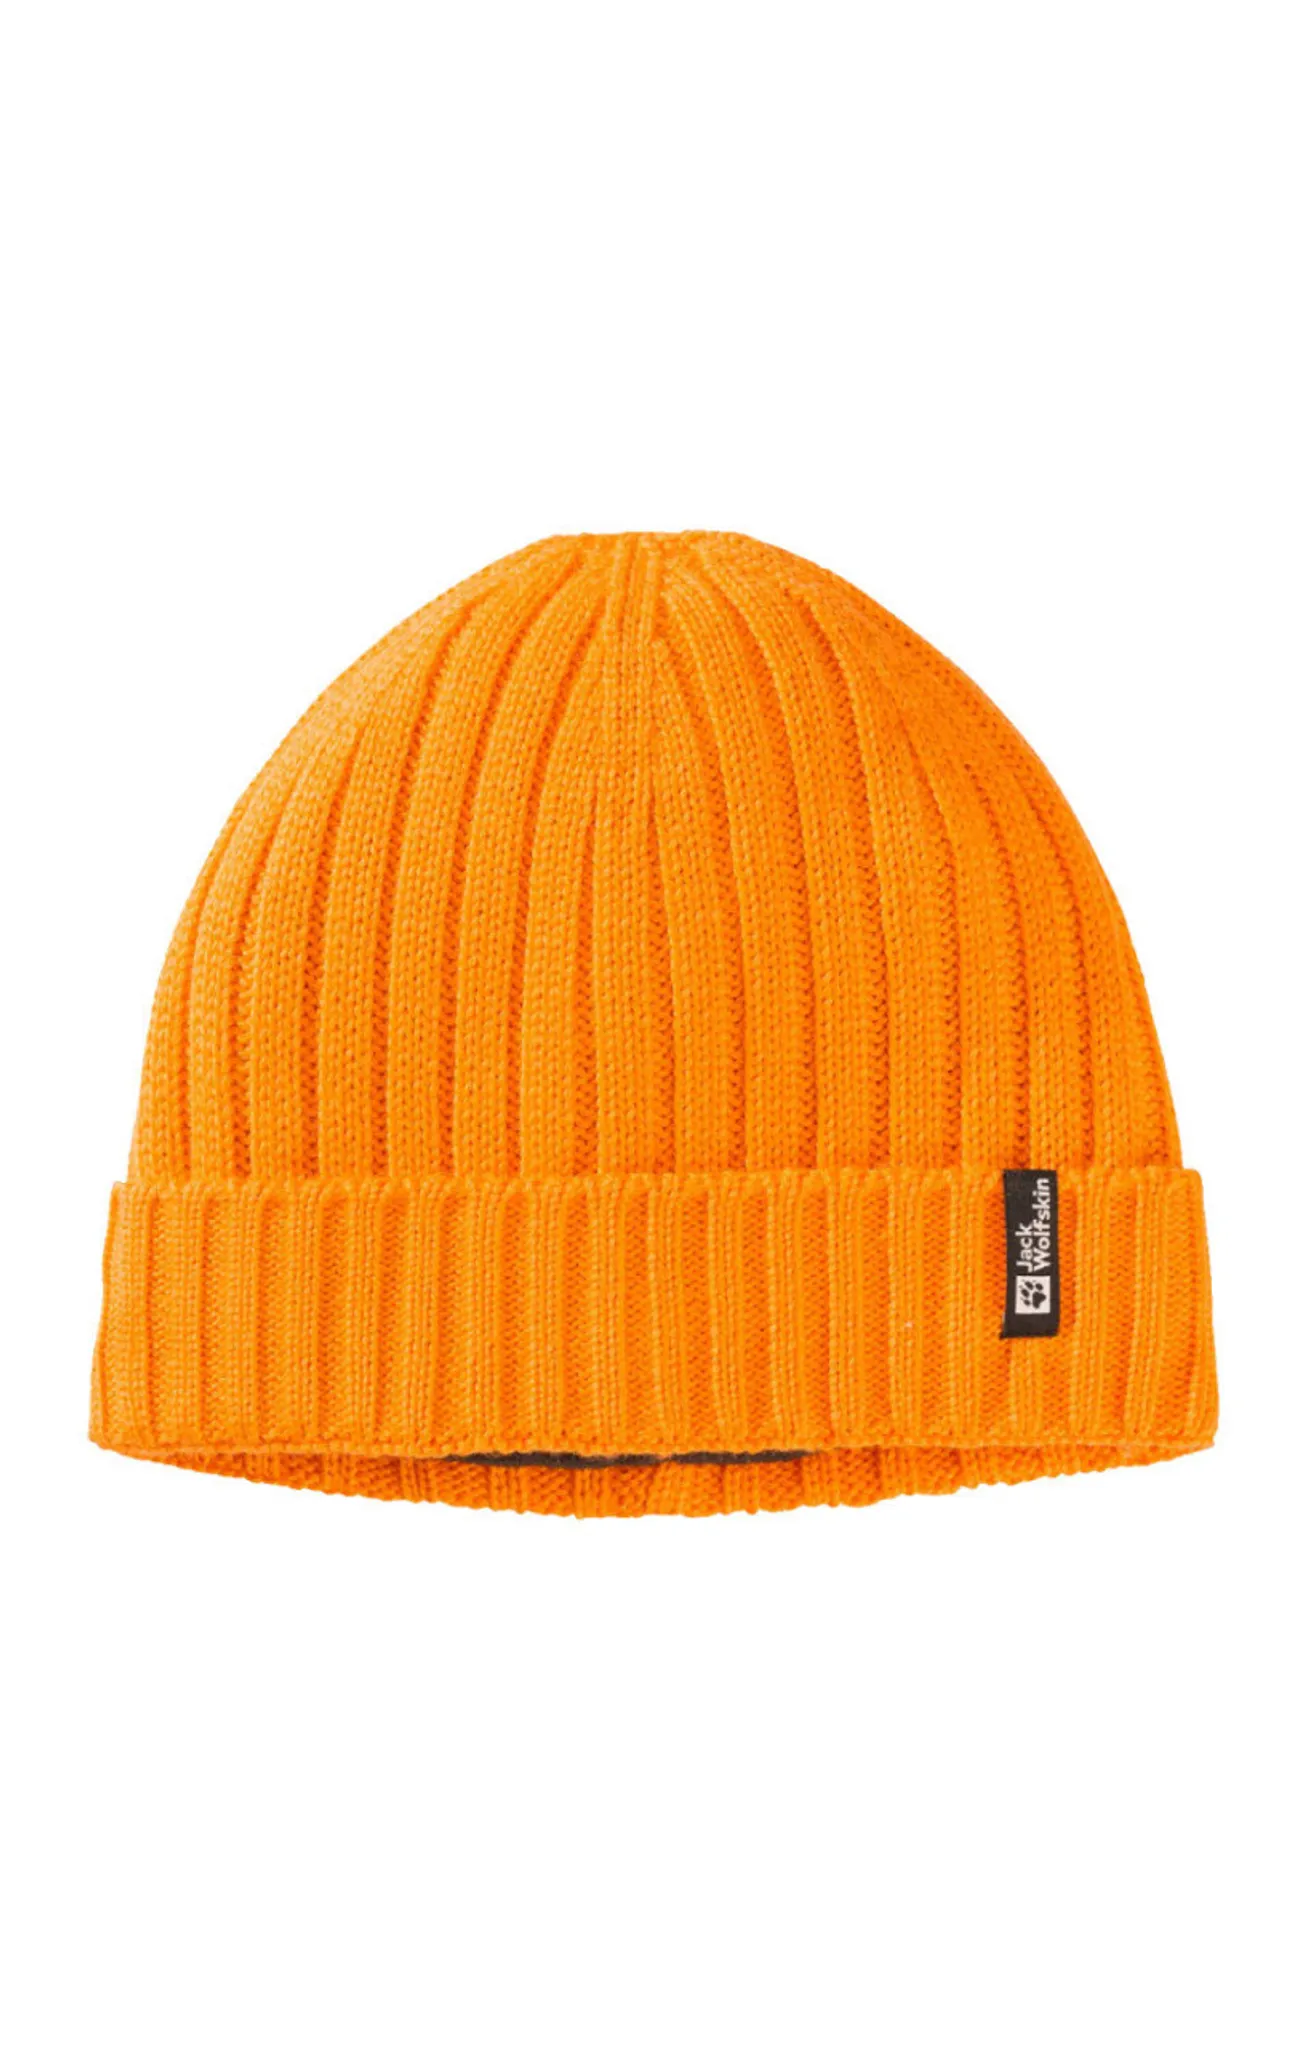 Knit WOLFSKIN JACK Rib orange Mütze Mütze